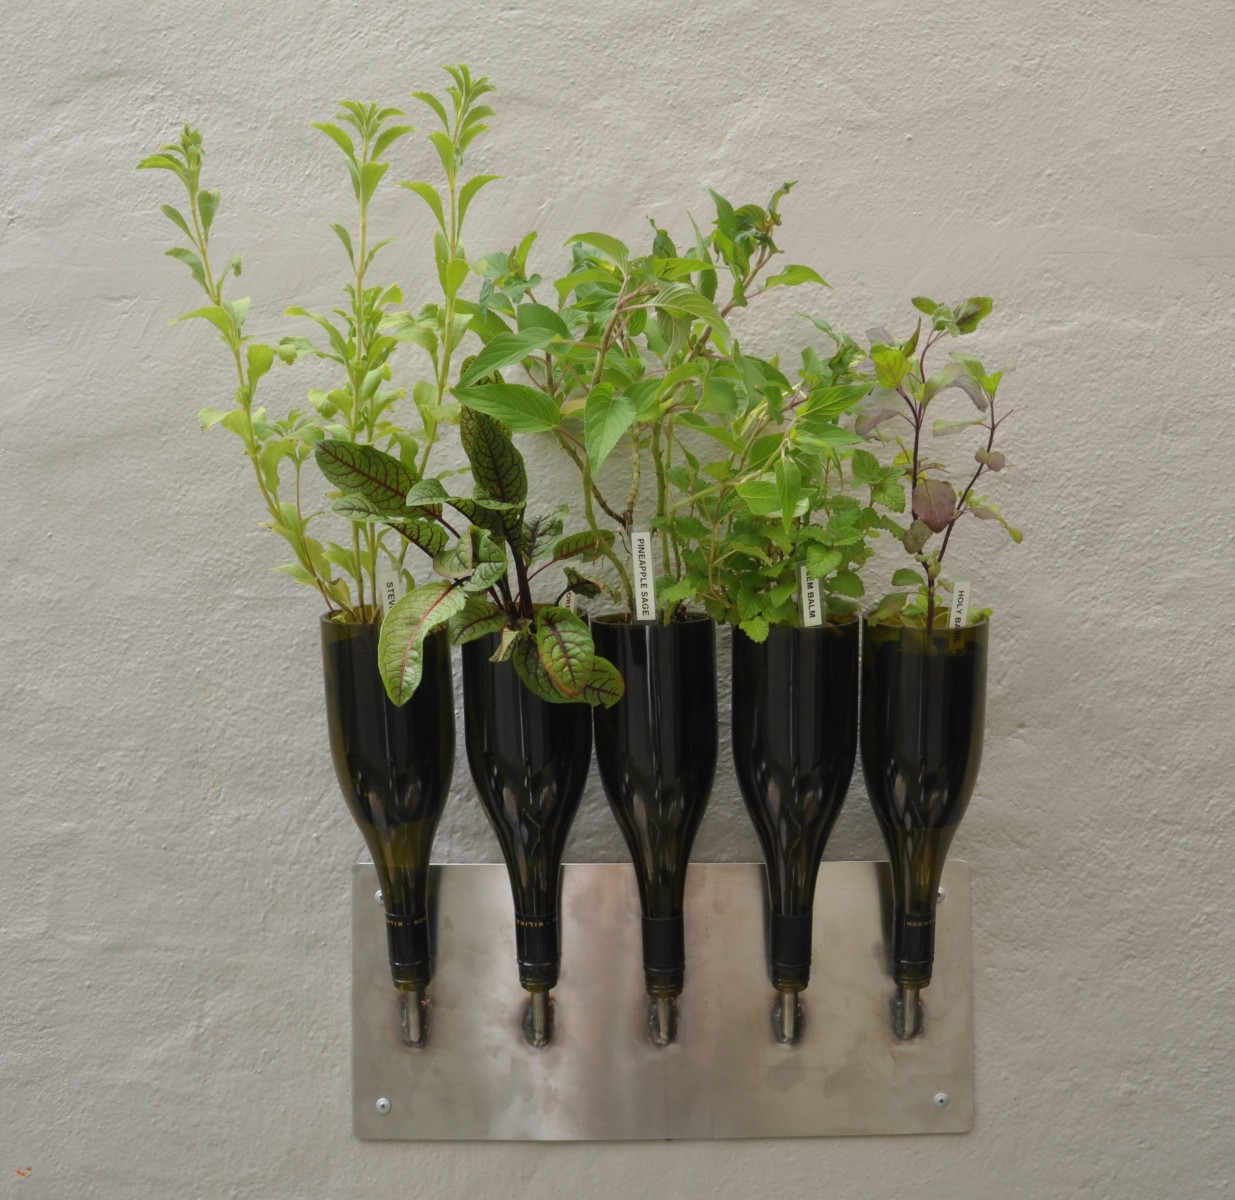 Give your kitchen a fresh look with a modern herb garden design (urbangreenspace.blogspot.com)